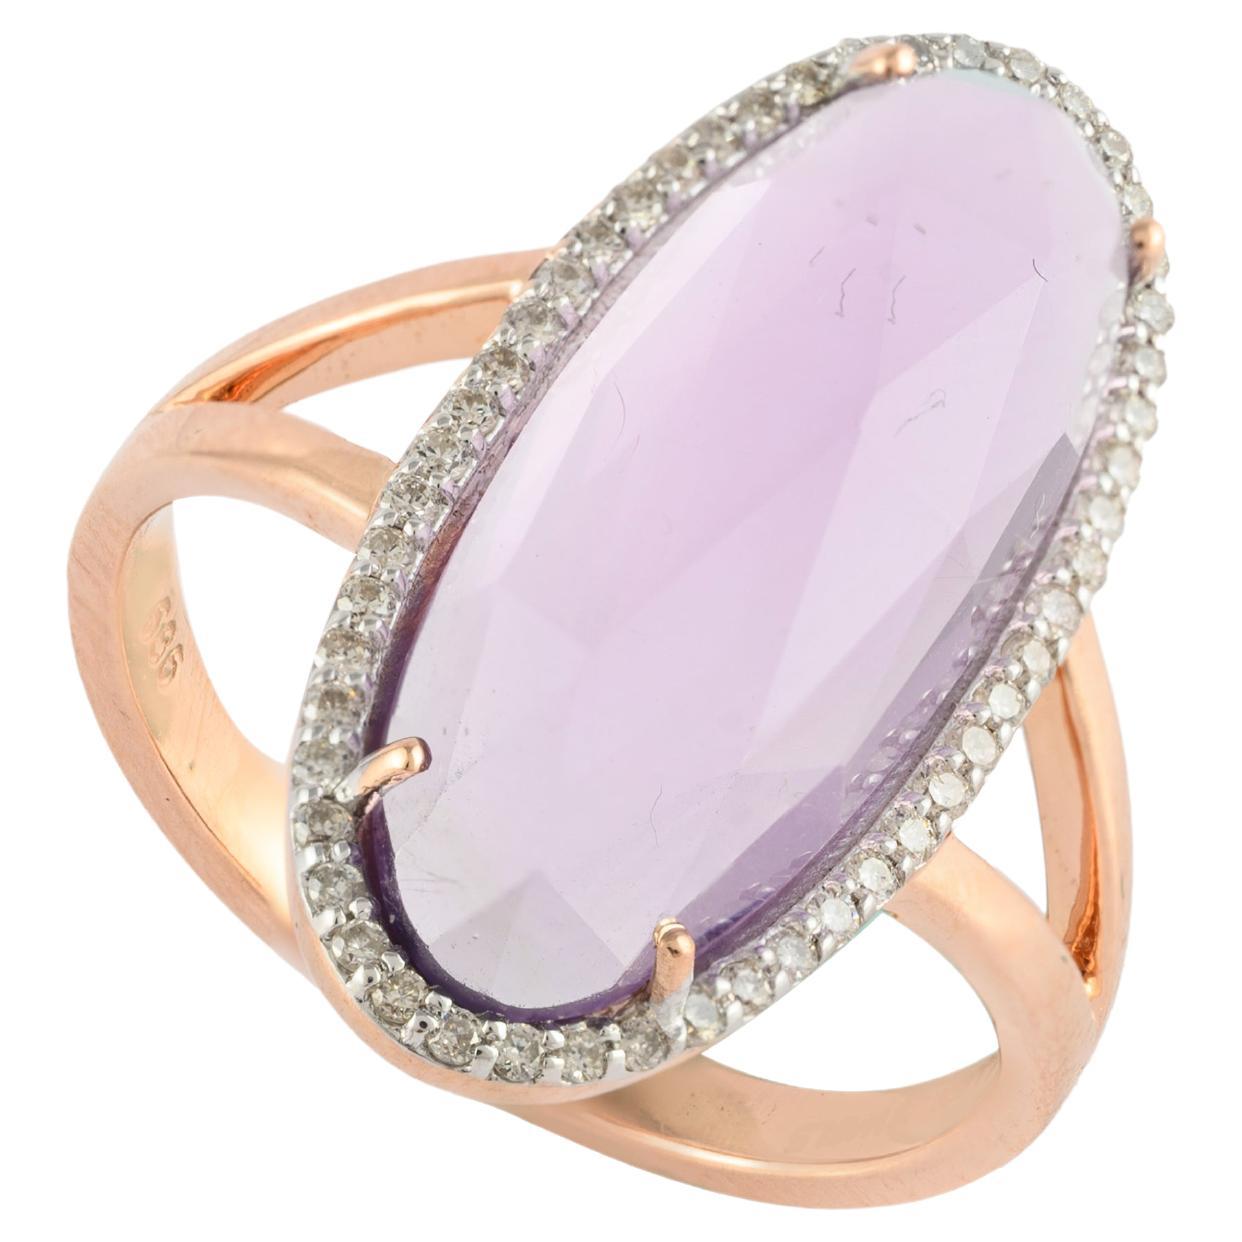 For Sale:  Statement 5.73 Carat Amethyst Diamond Ring 14 Karat Solid Rose Gold